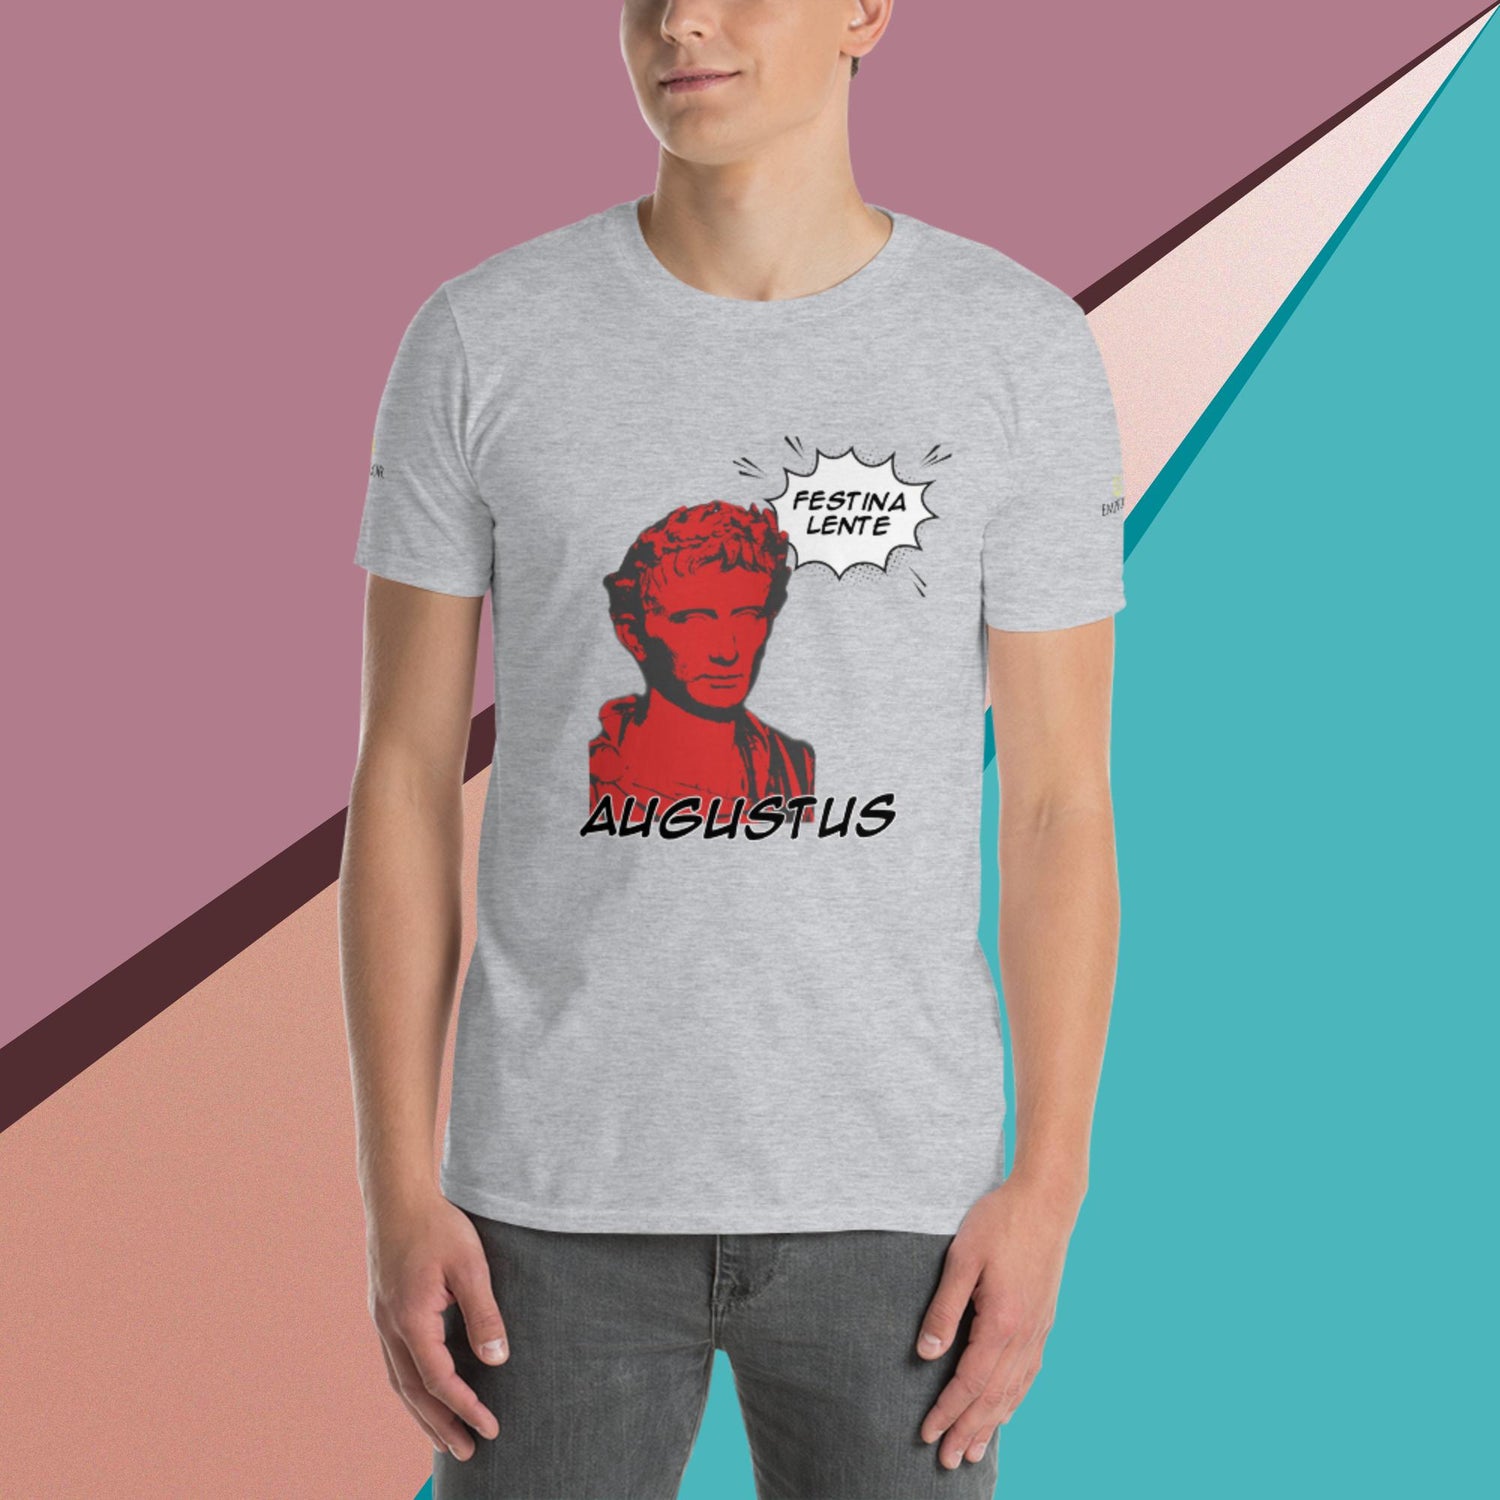 Augustus Pop Art T-Shirt - Emperor